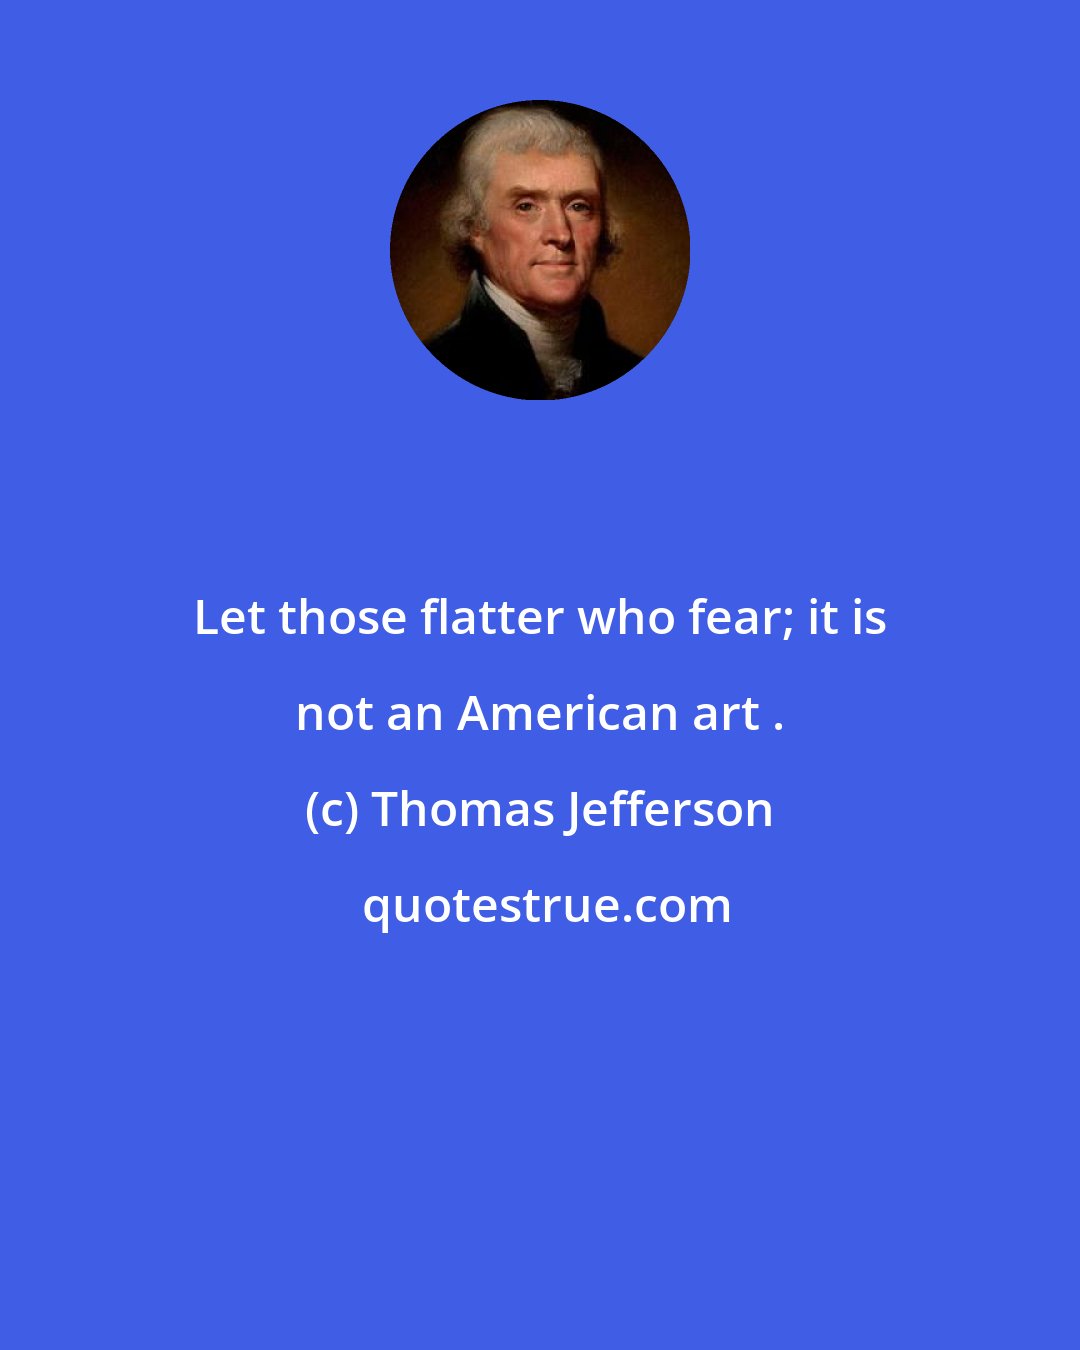 Thomas Jefferson: Let those flatter who fear; it is not an American art .